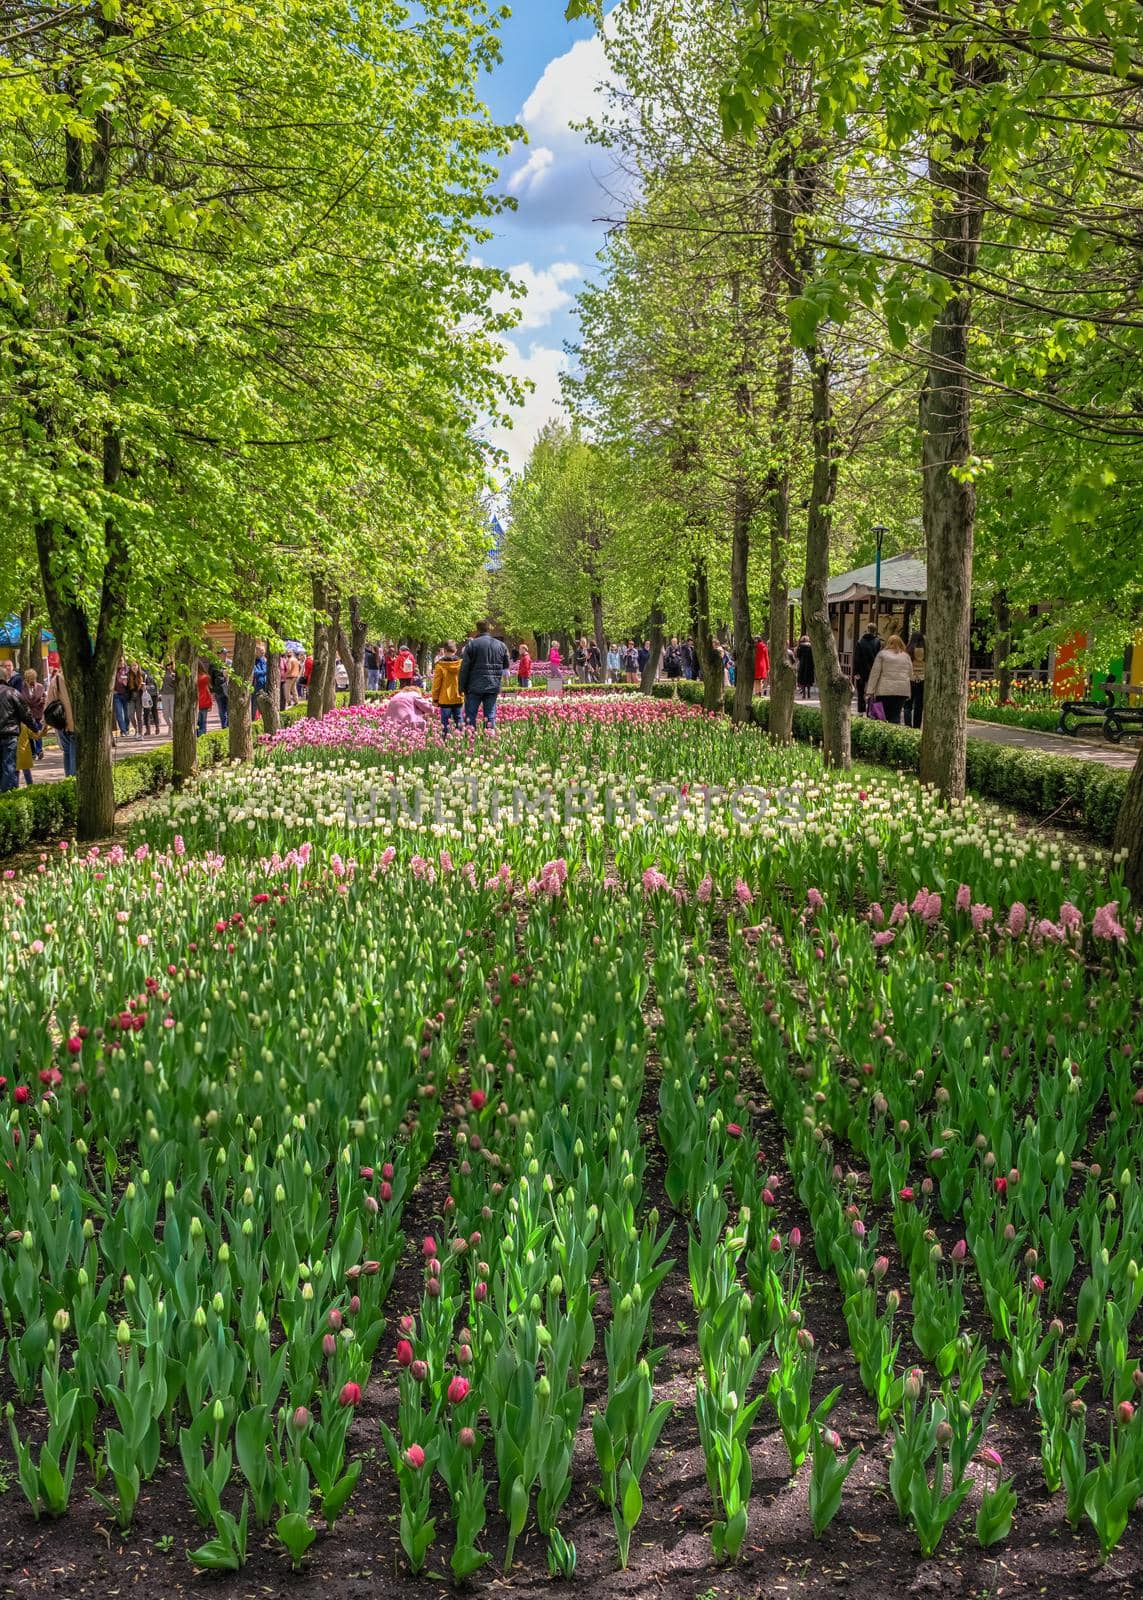 Tulip alley in the Kropyvnytskyi arboretum, Ukraine by Multipedia